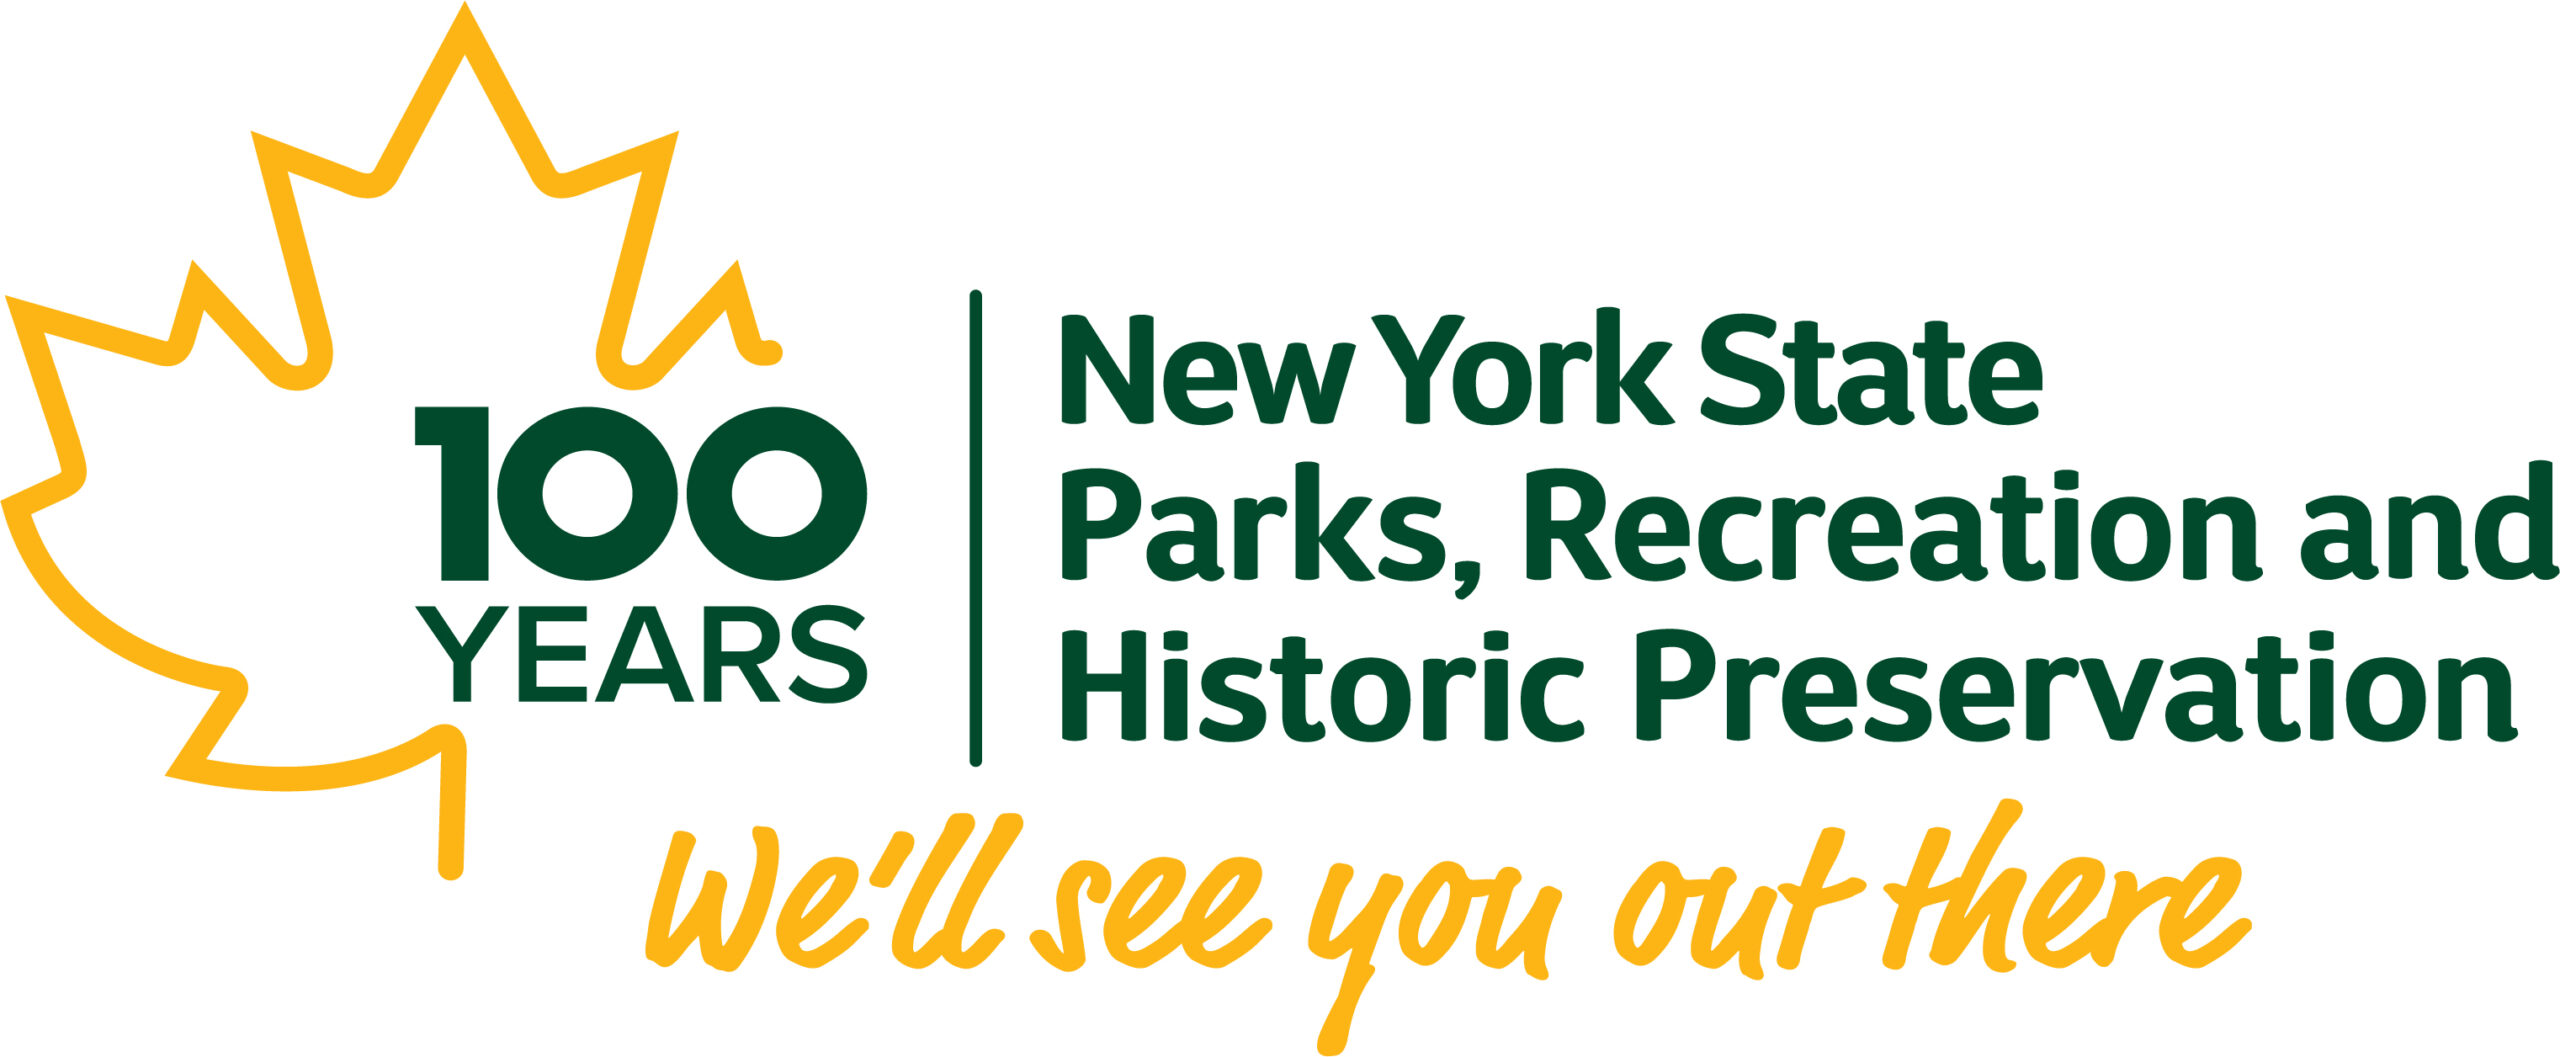 NYS Parks Sponsor of Evolution of the American Landscape Symposium